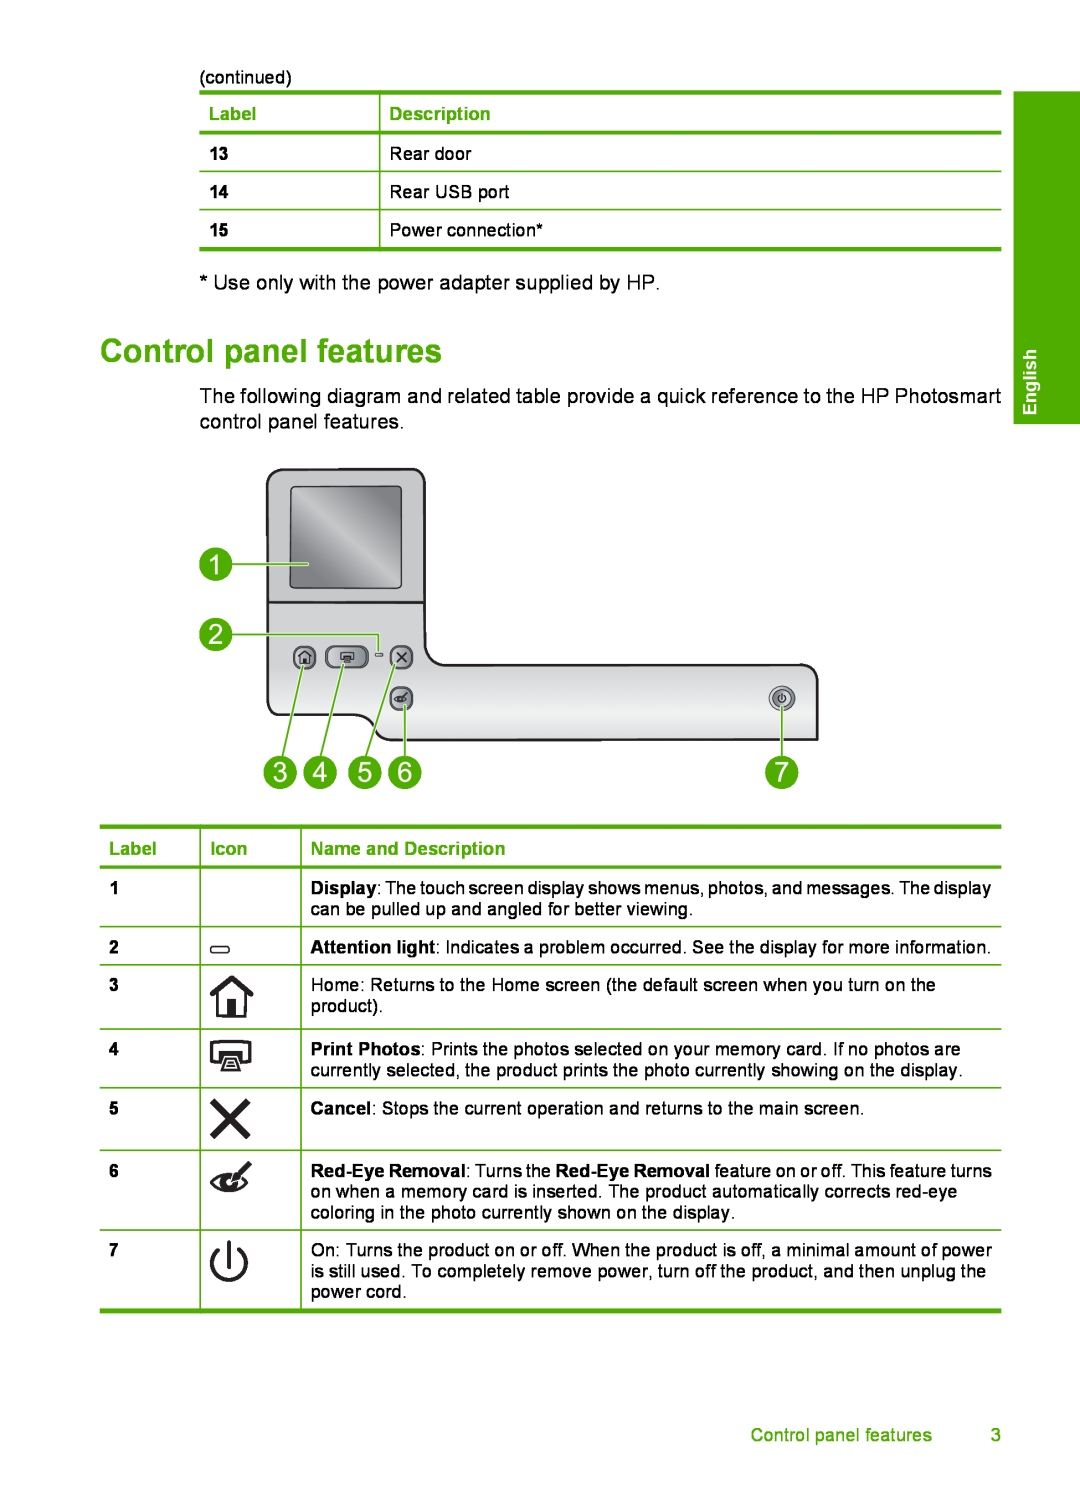 HP D7560 manual Control panel features, Label, Description, Rear door, Rear USB port, Power connection, English, Icon 